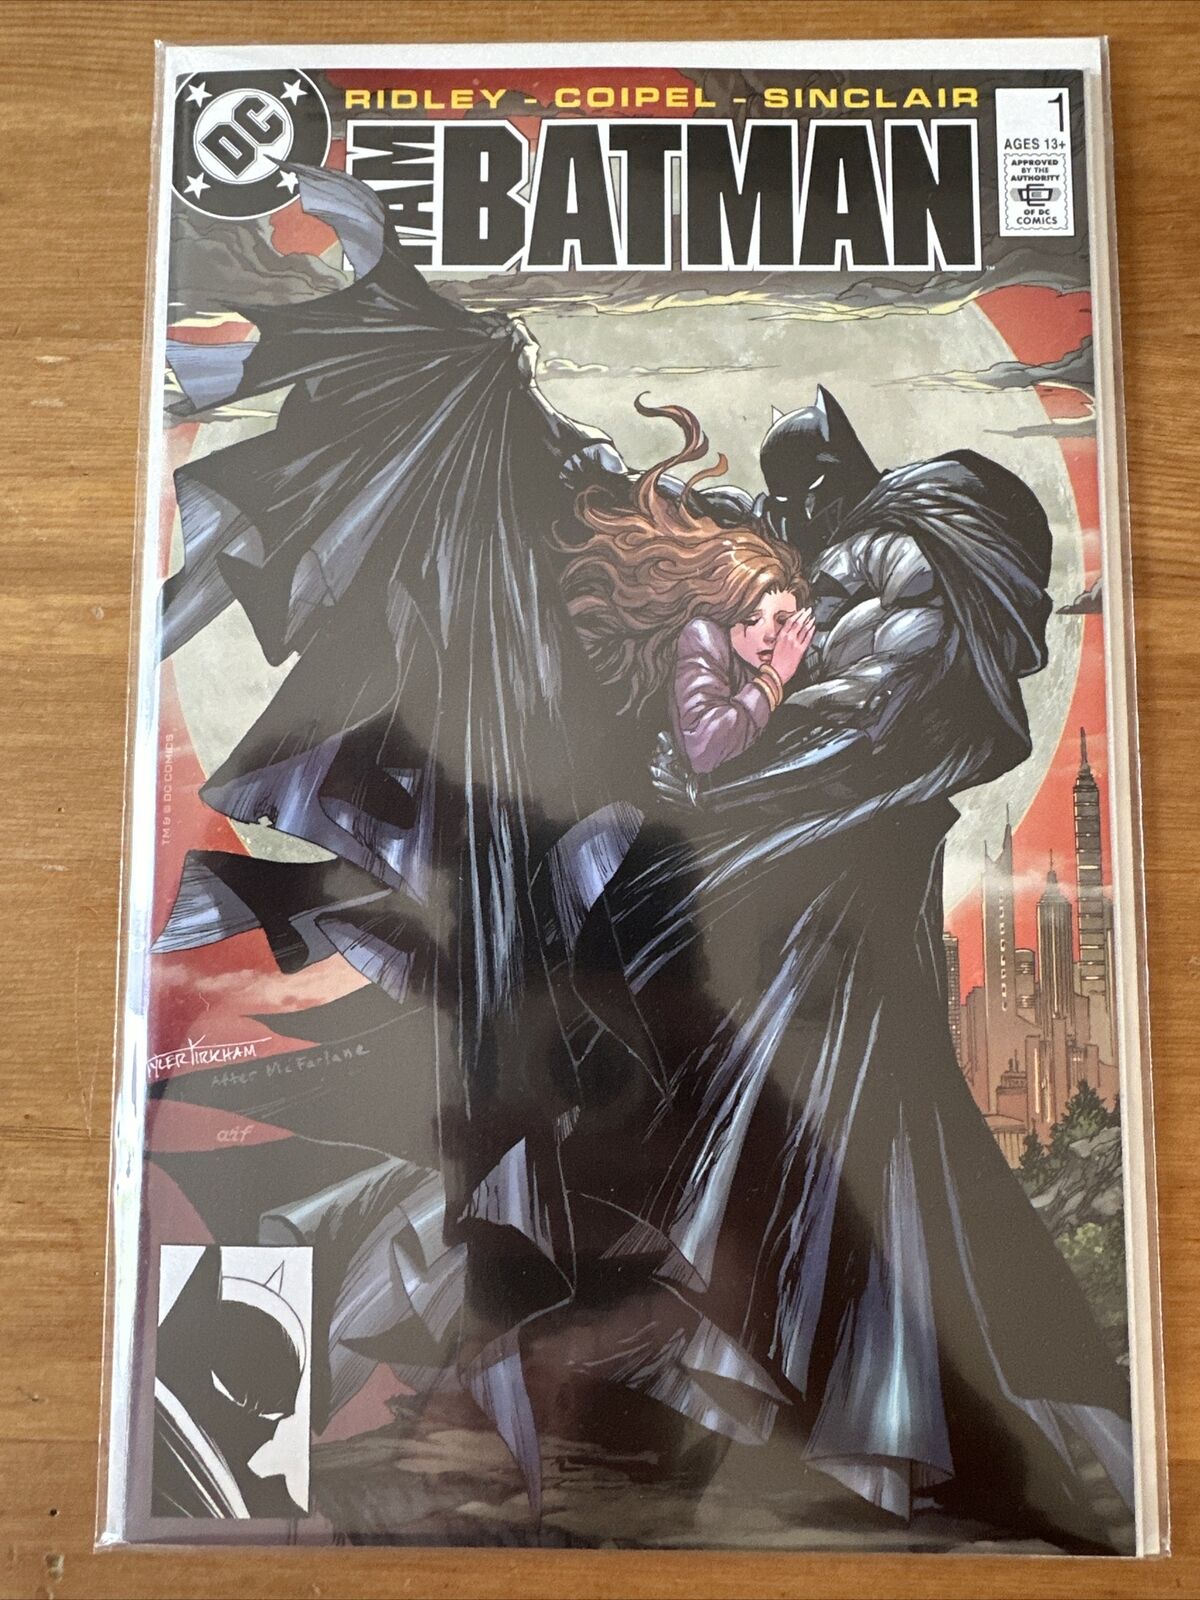 I AM BATMAN #1 (TYLER KIRKHAM EXCLUSIVE VARIANT) COMIC BOOK ~ DC ~ IN STOCK NOW